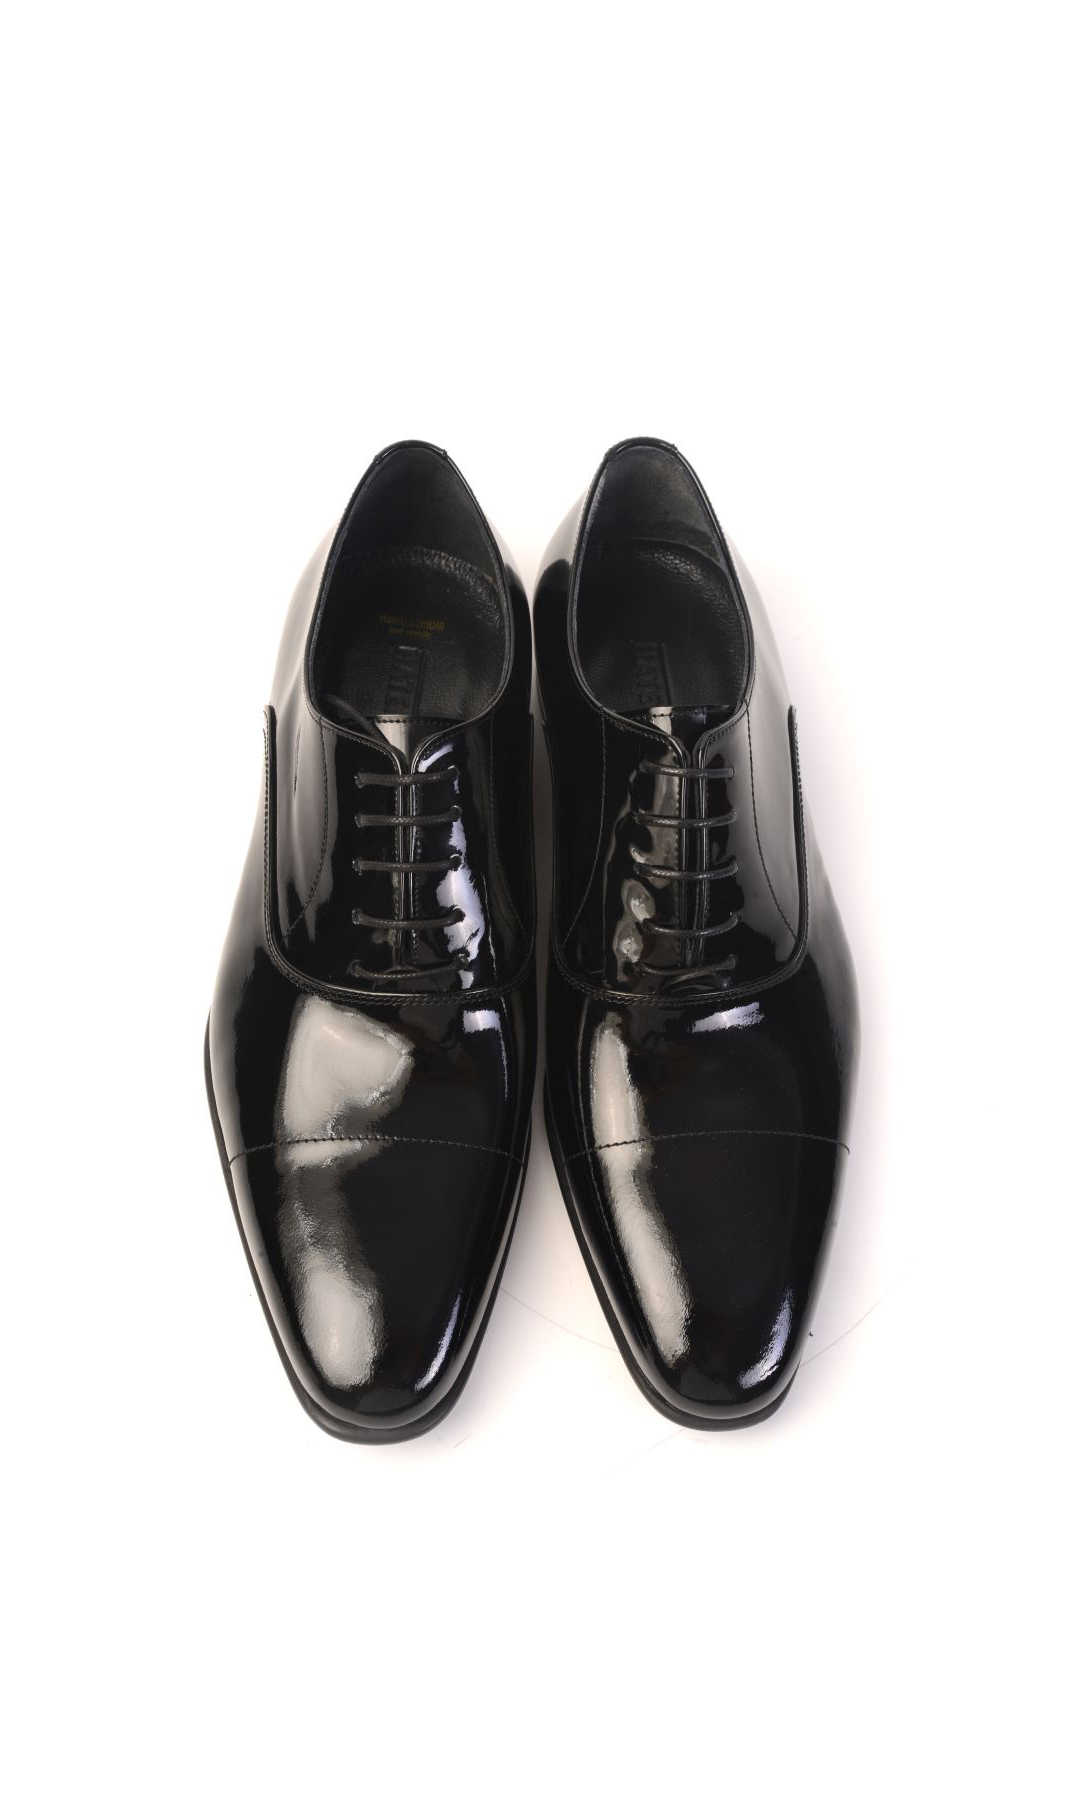 Siyah Hakiki Deri Klasik Ayakkabı